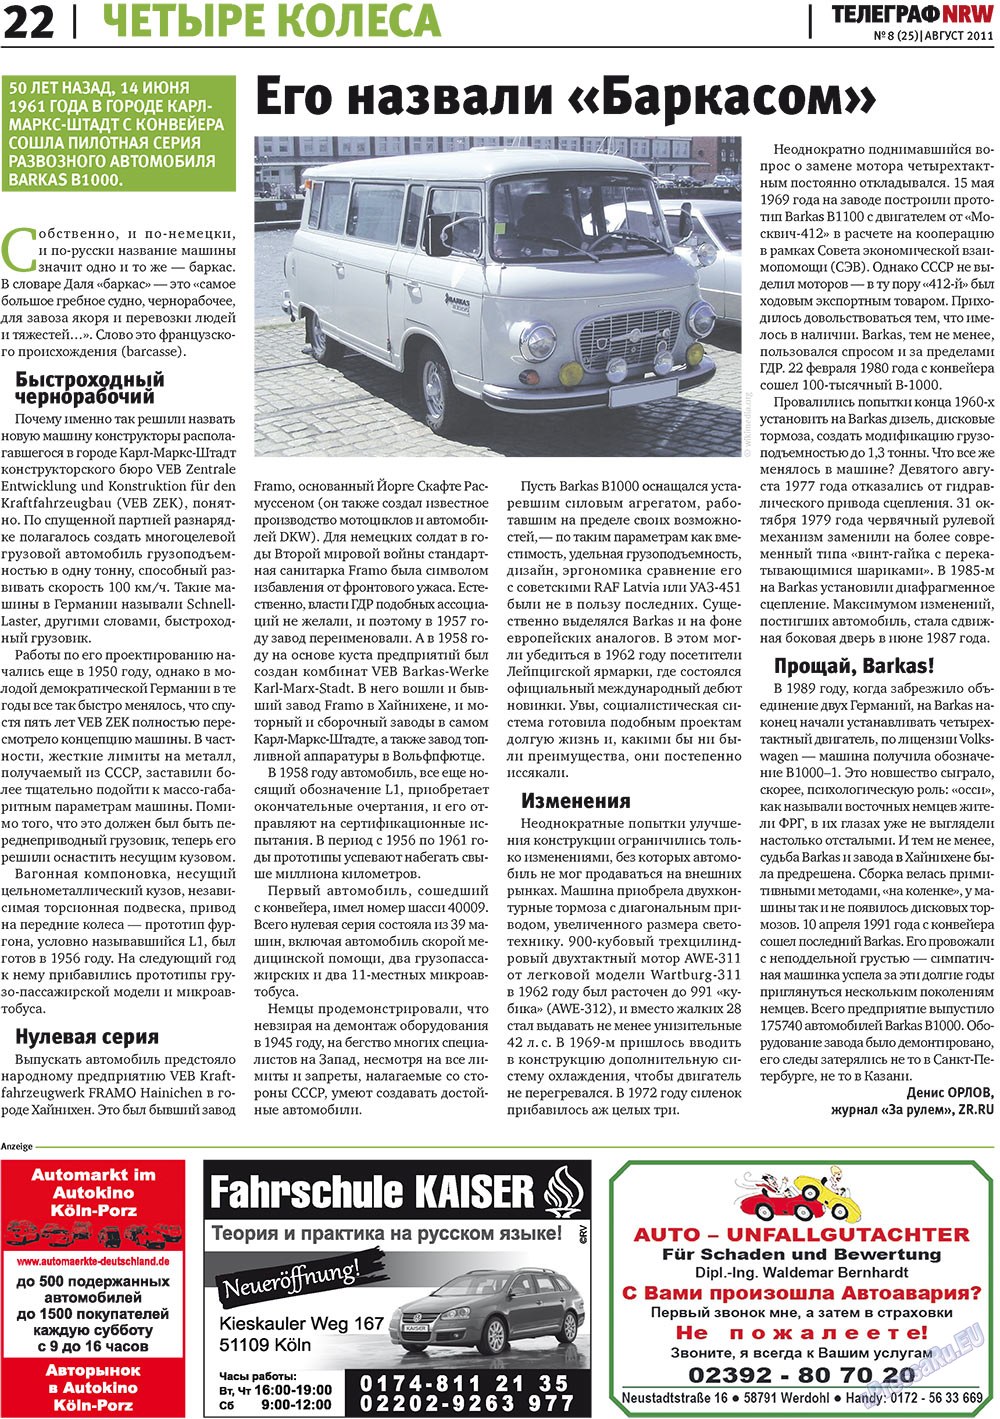 Телеграф NRW, газета. 2011 №8 стр.22